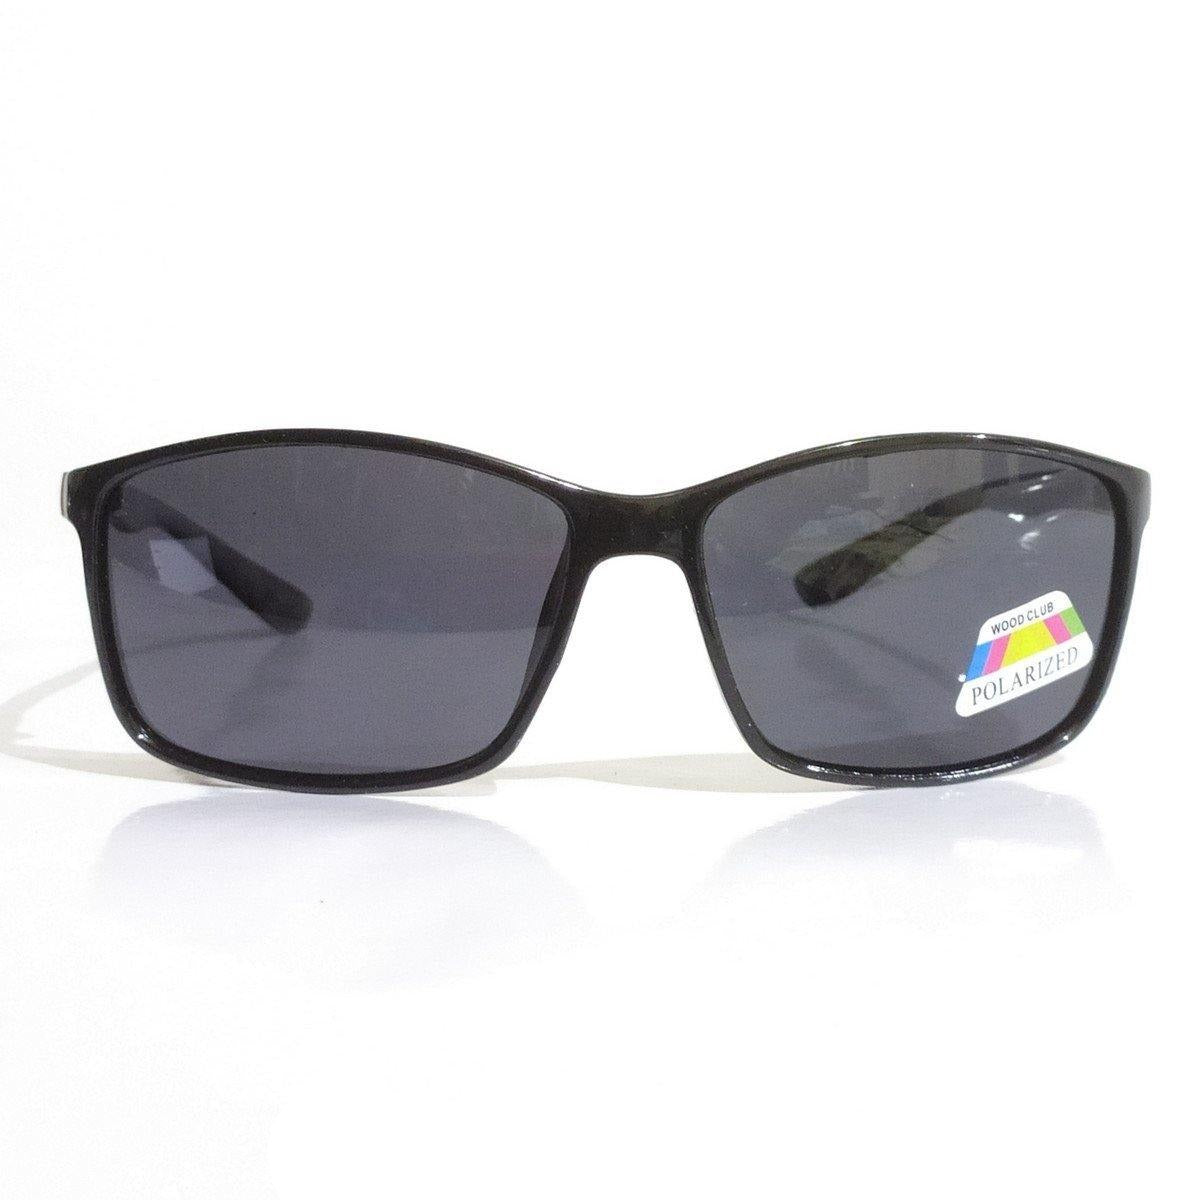 Wraparound Sports Polarized Sunglasses for Men and Women 10066SBK - Glasses India Online